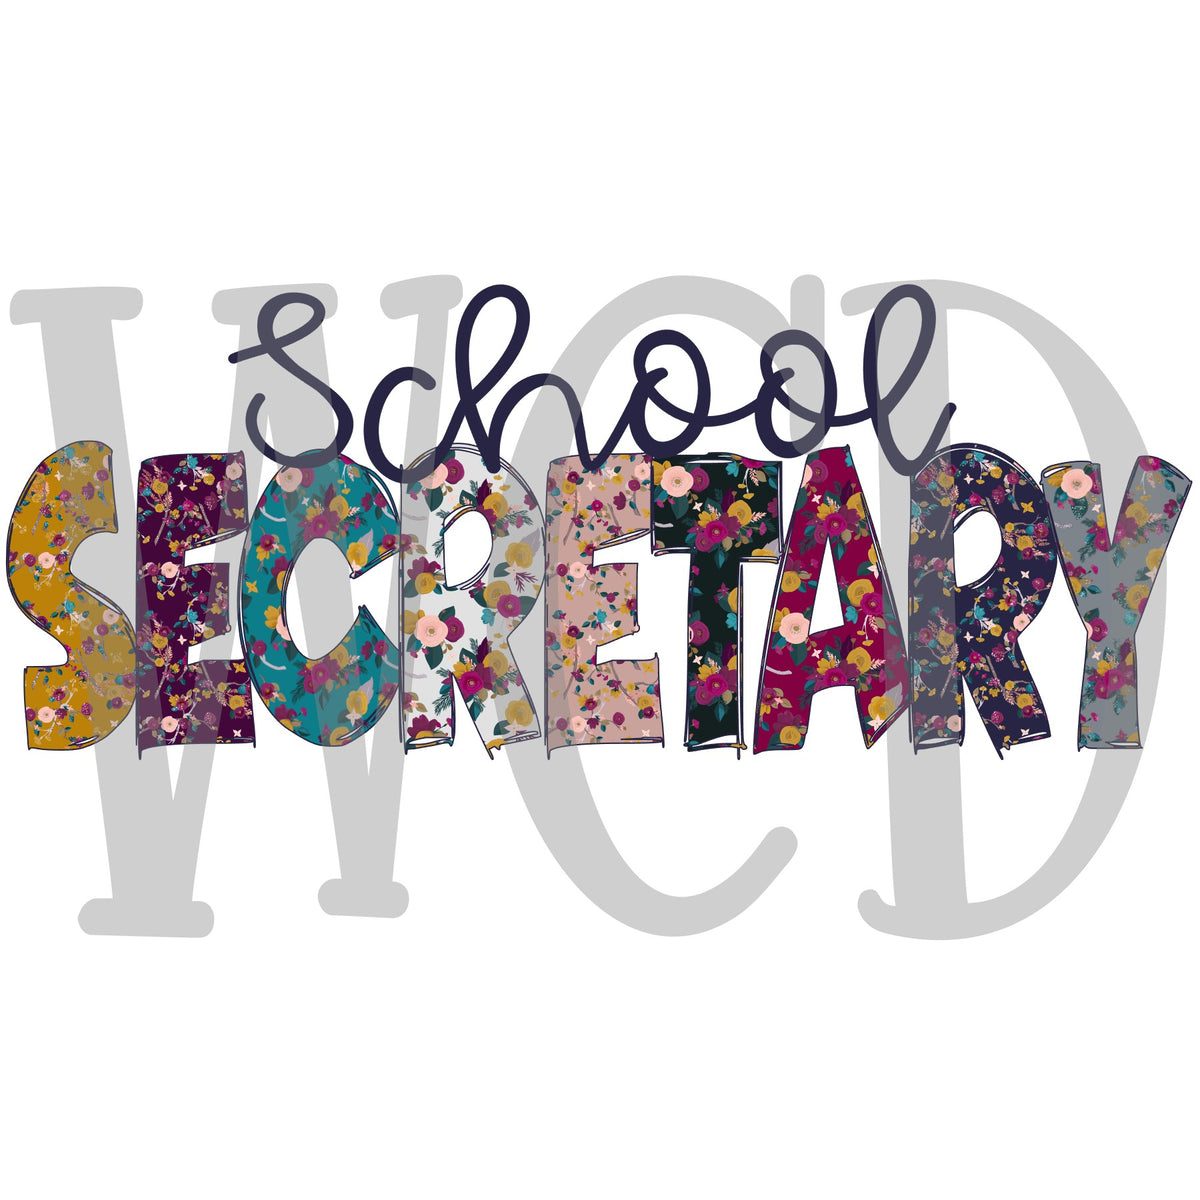 school secretary clipart